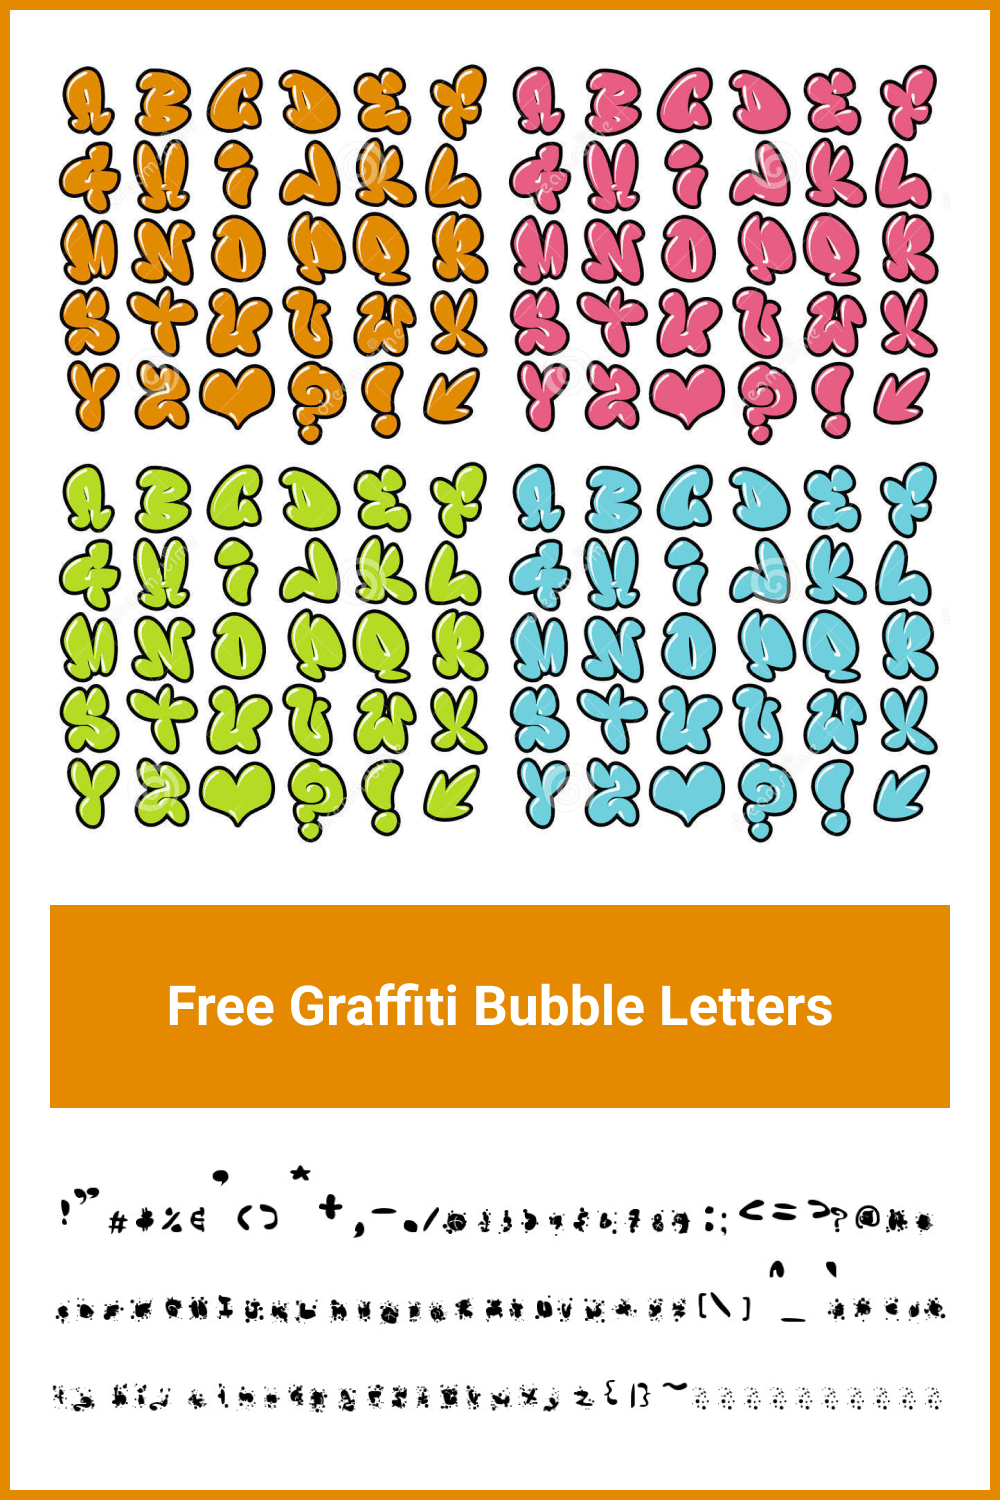 Graffiti bubble letters.